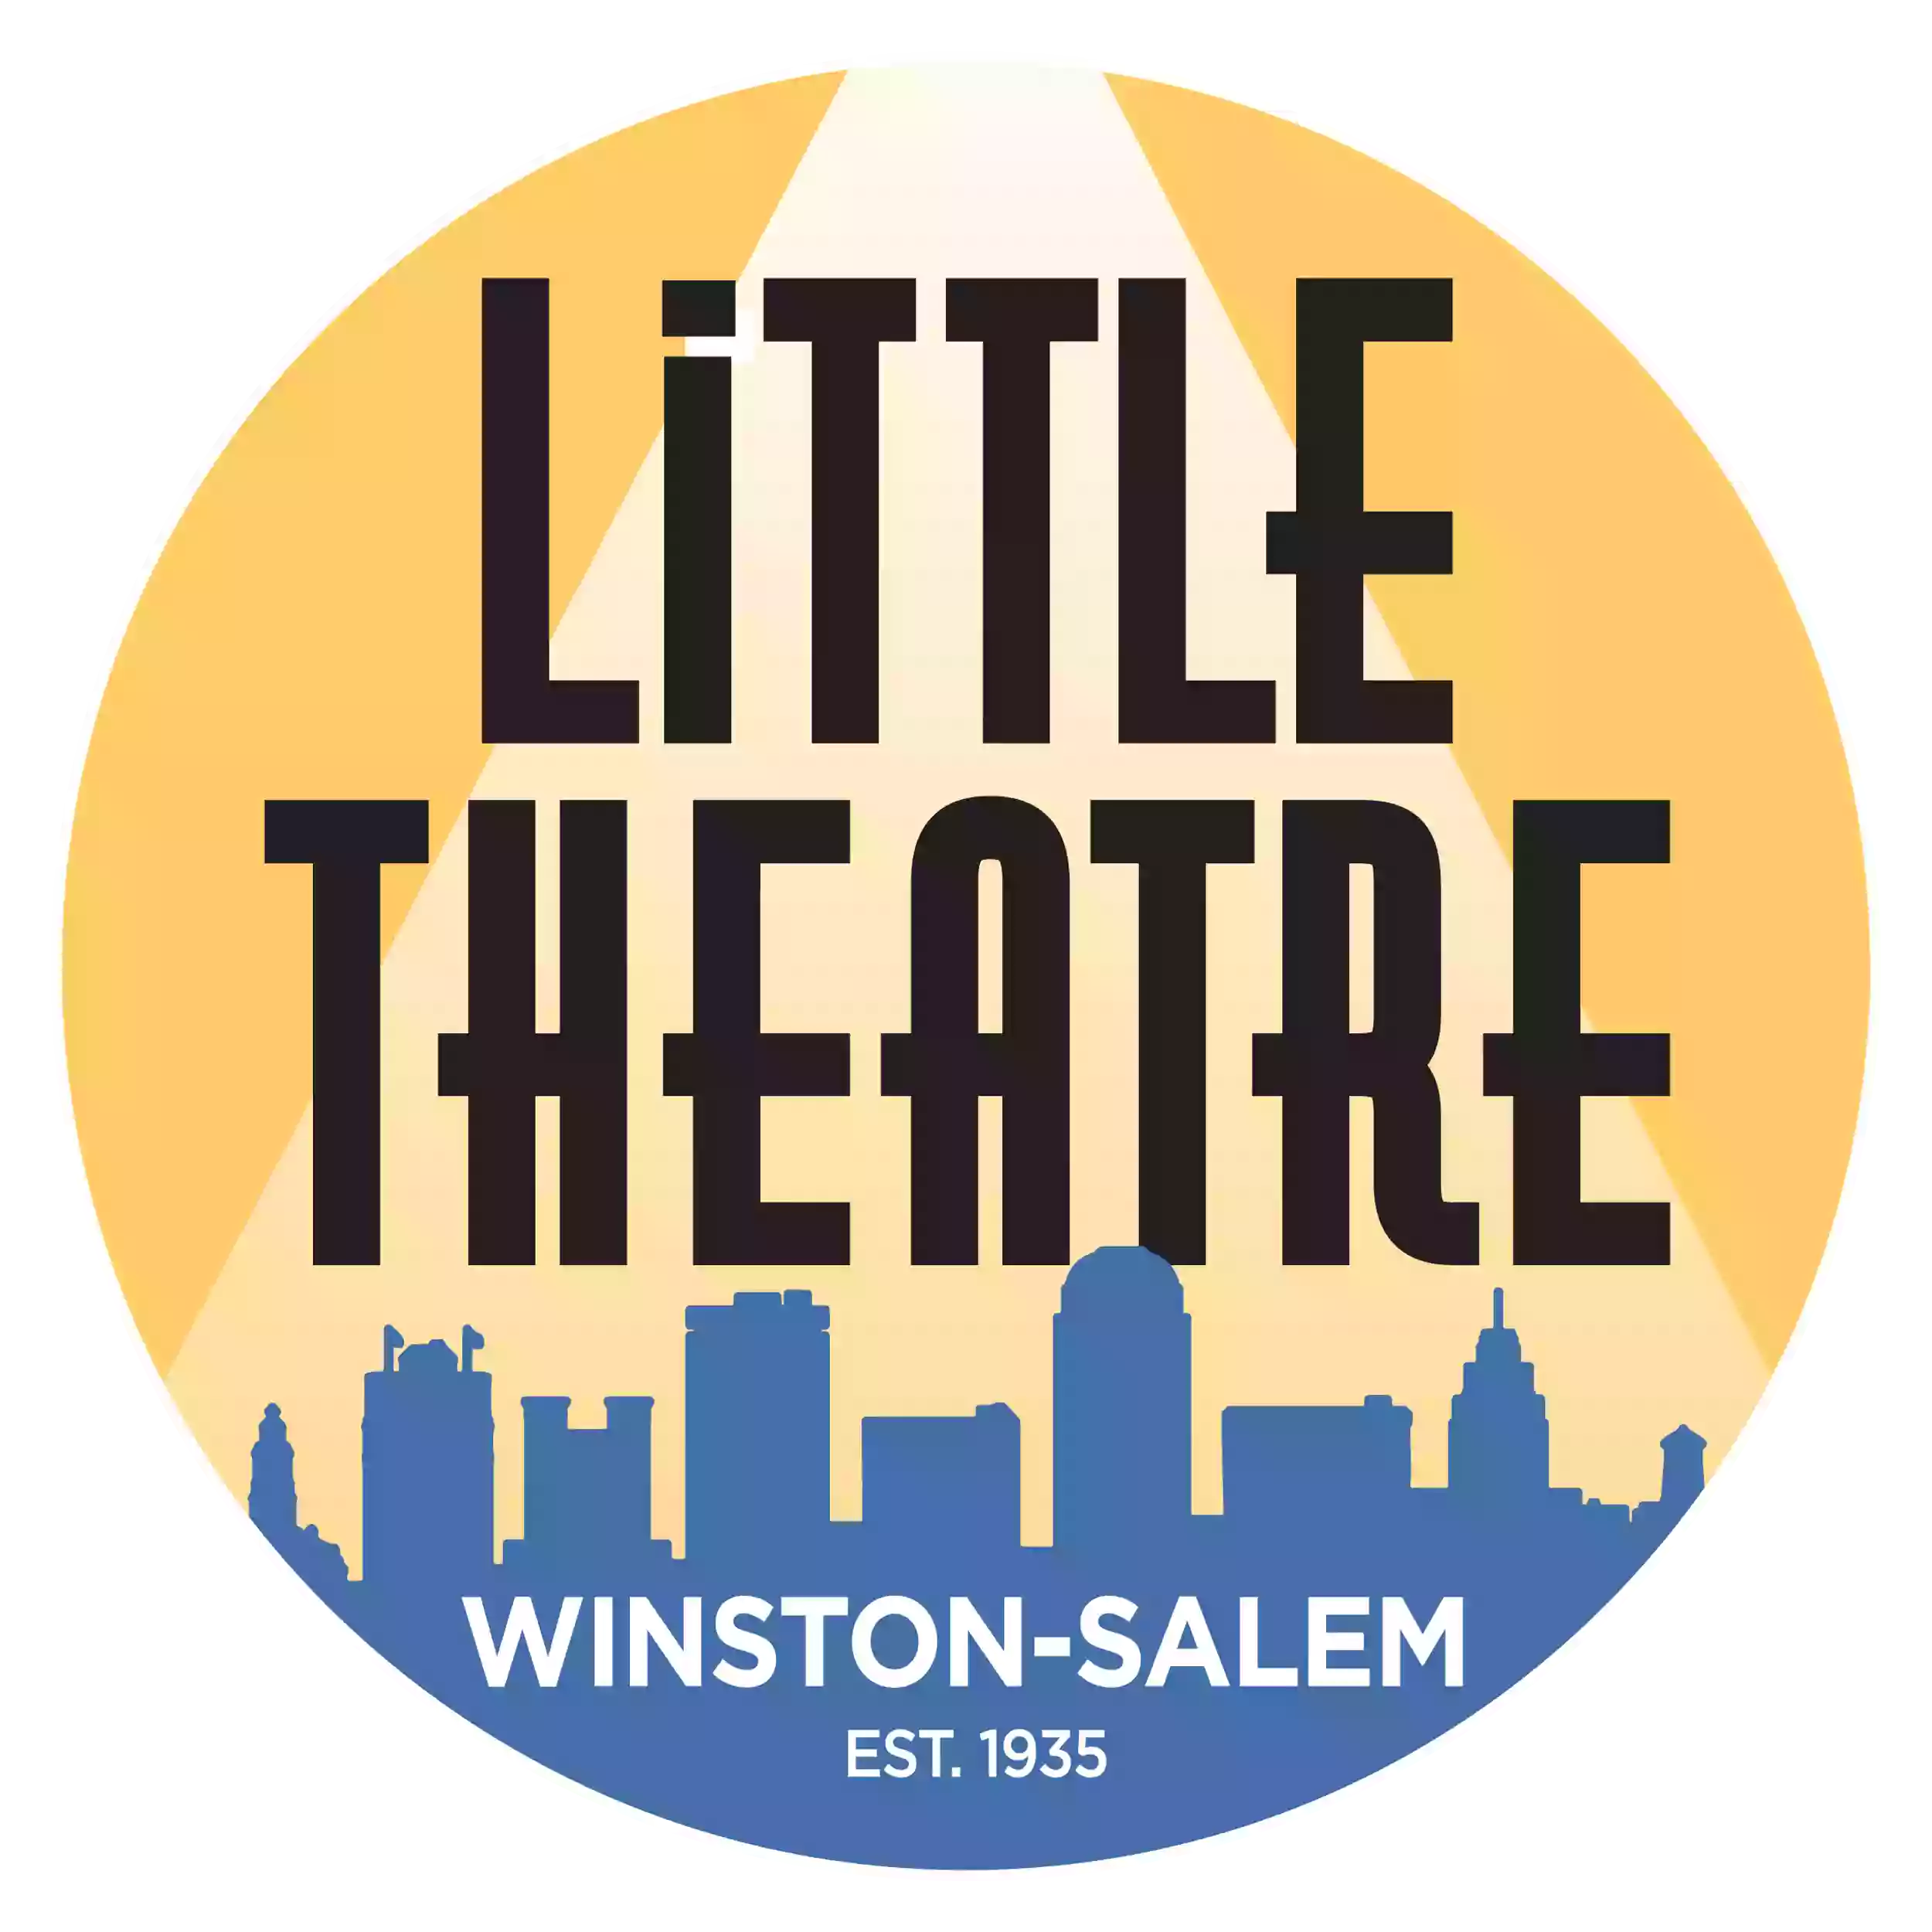 The Little Theatre of Winston-Salem